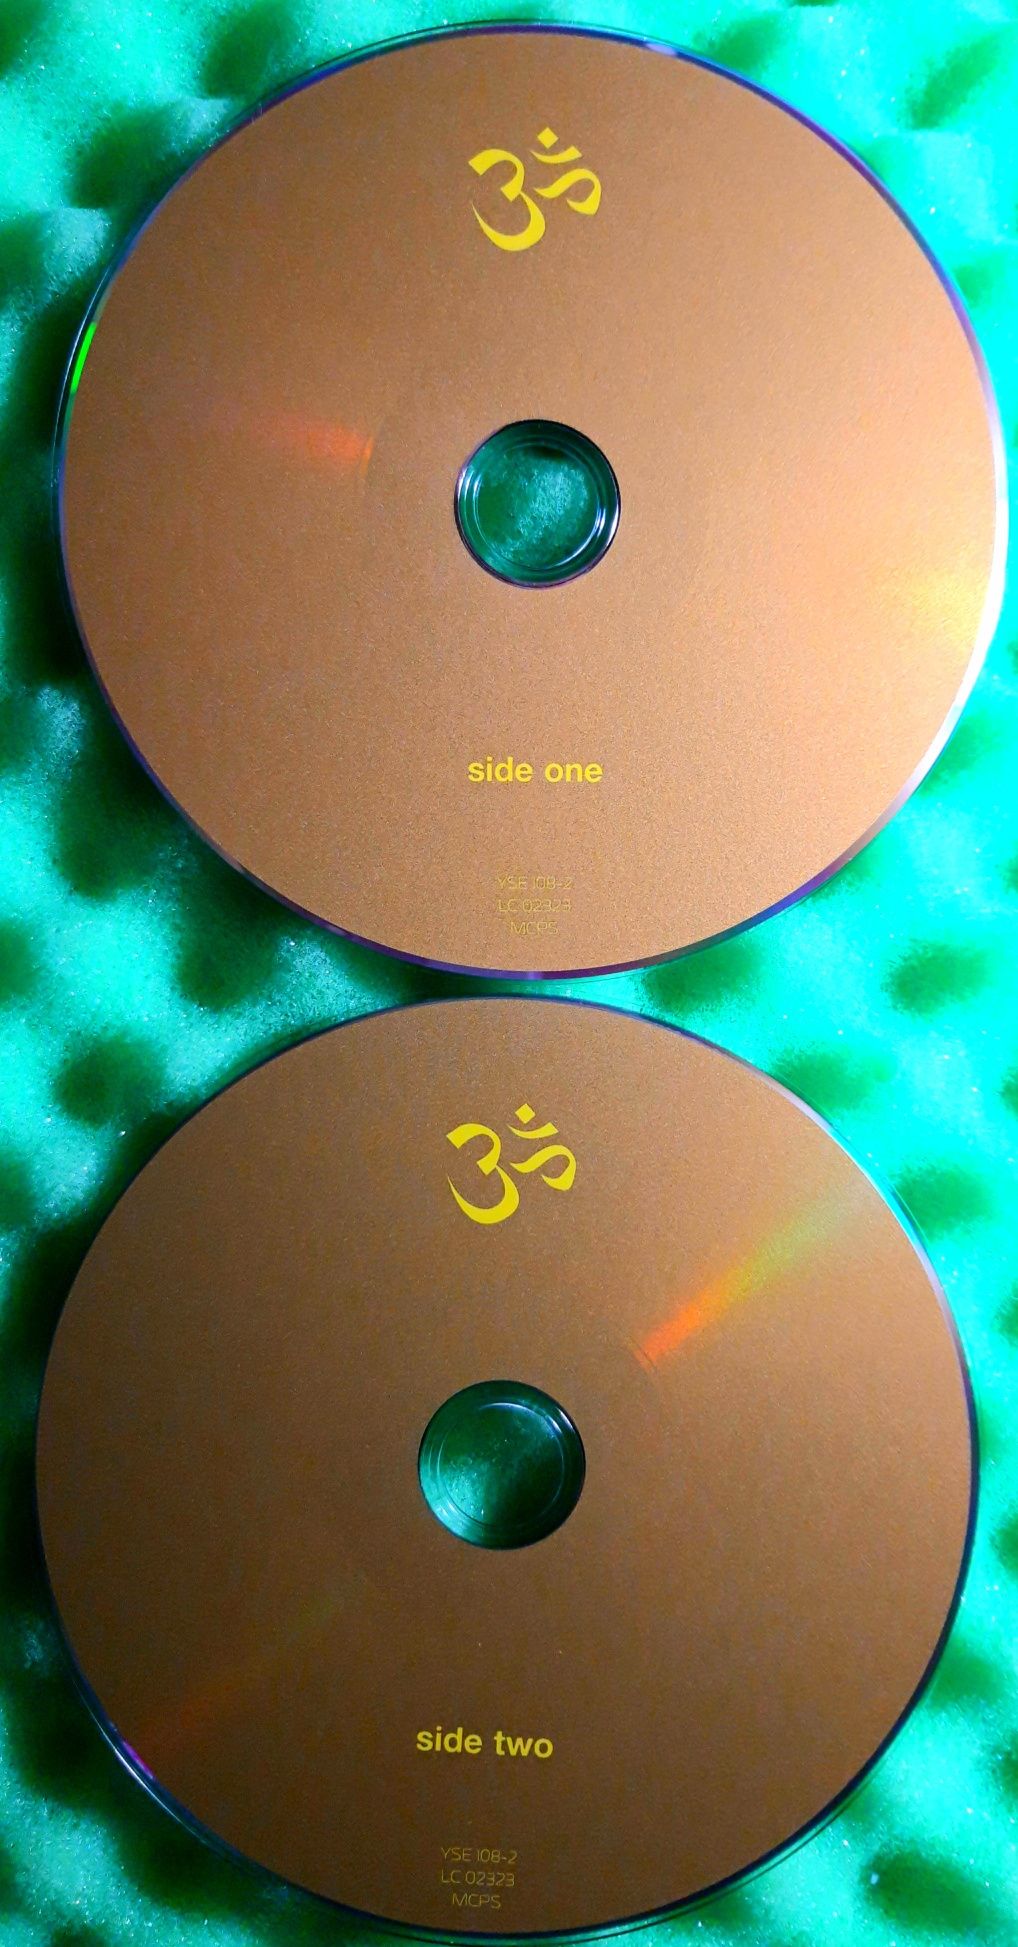 Goa Volume 16 (2xCD, 2006)